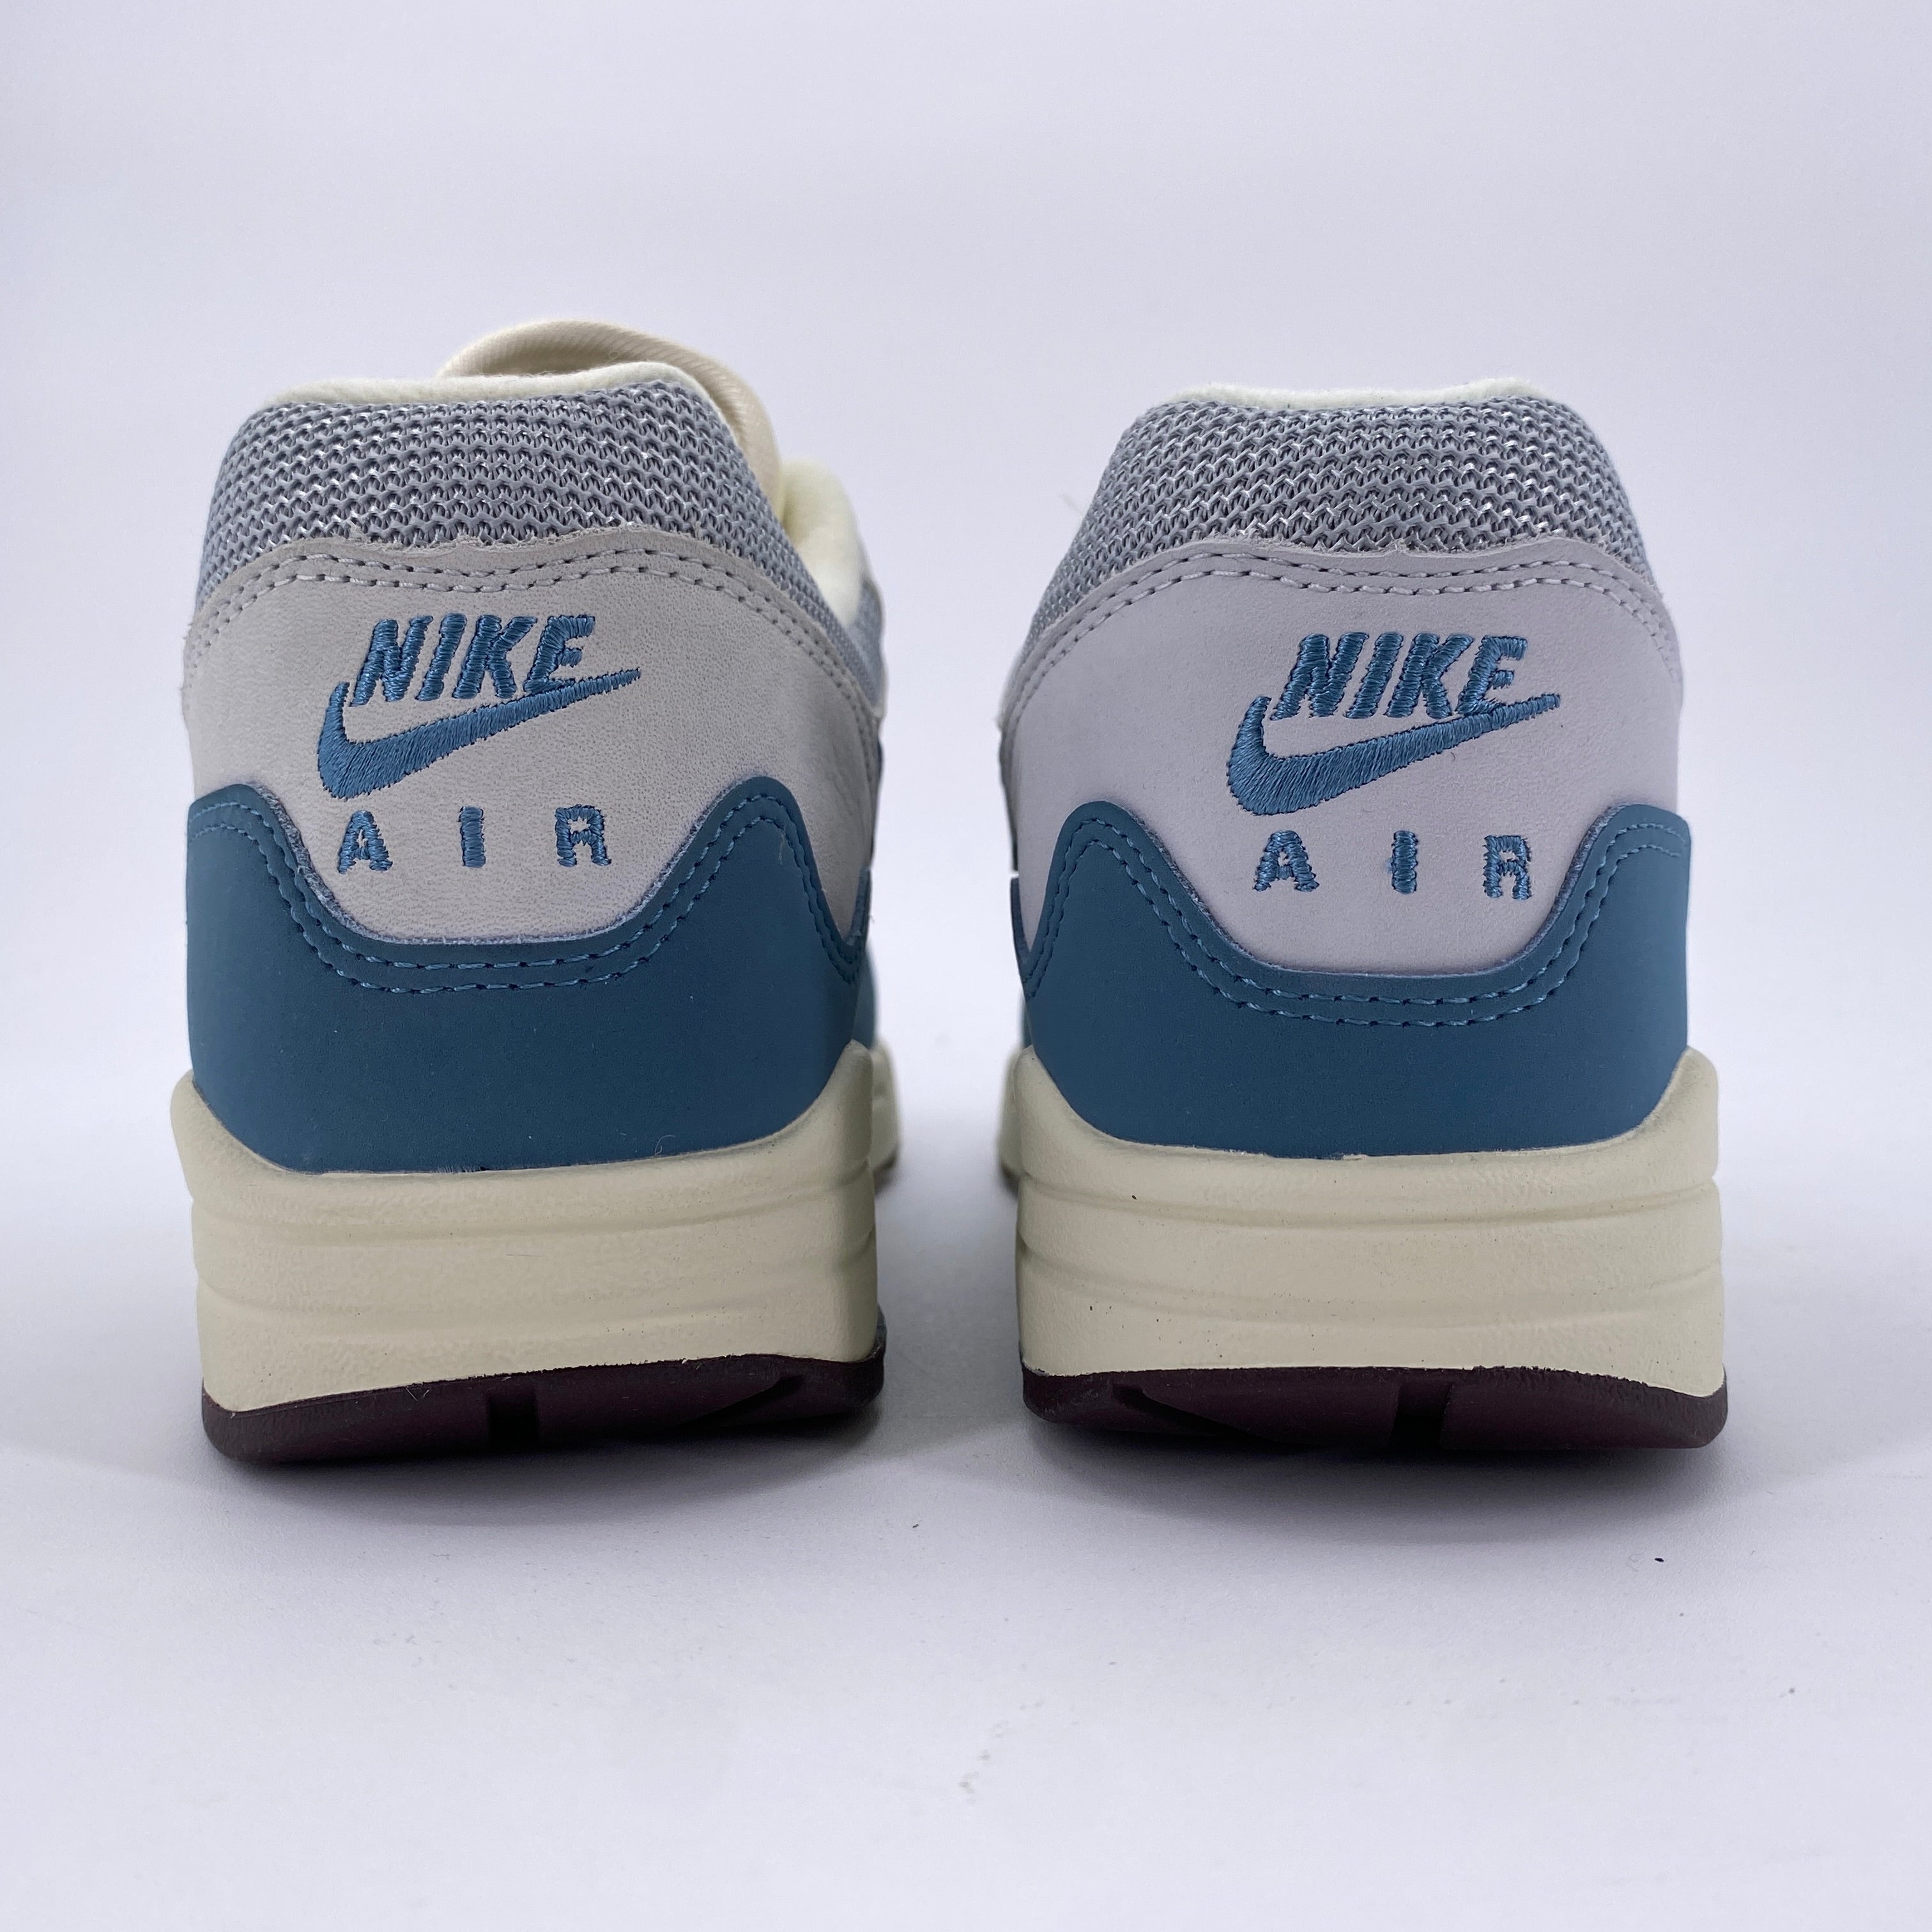 Nike Air Max 1 / Patta "Waves Aqua" 2021 New Size 9